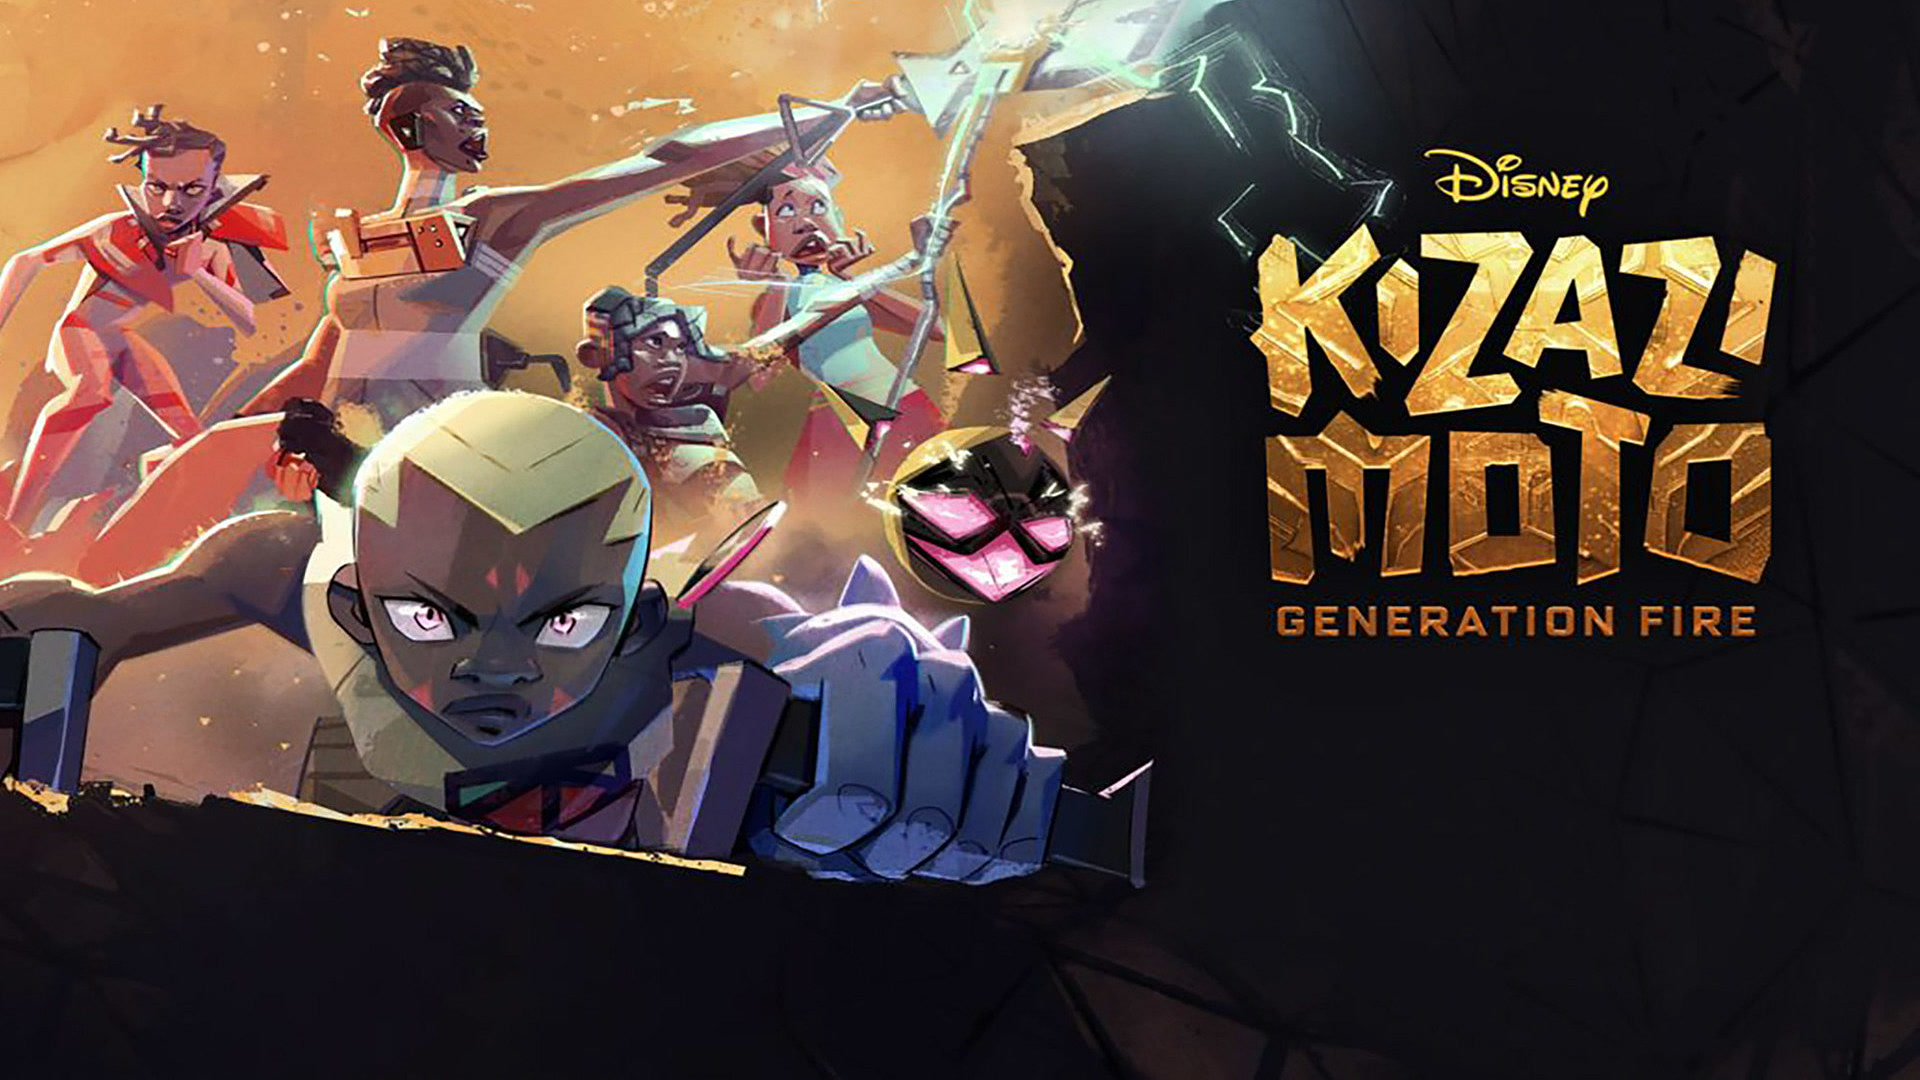 Kizazi Moto: Generation Fire